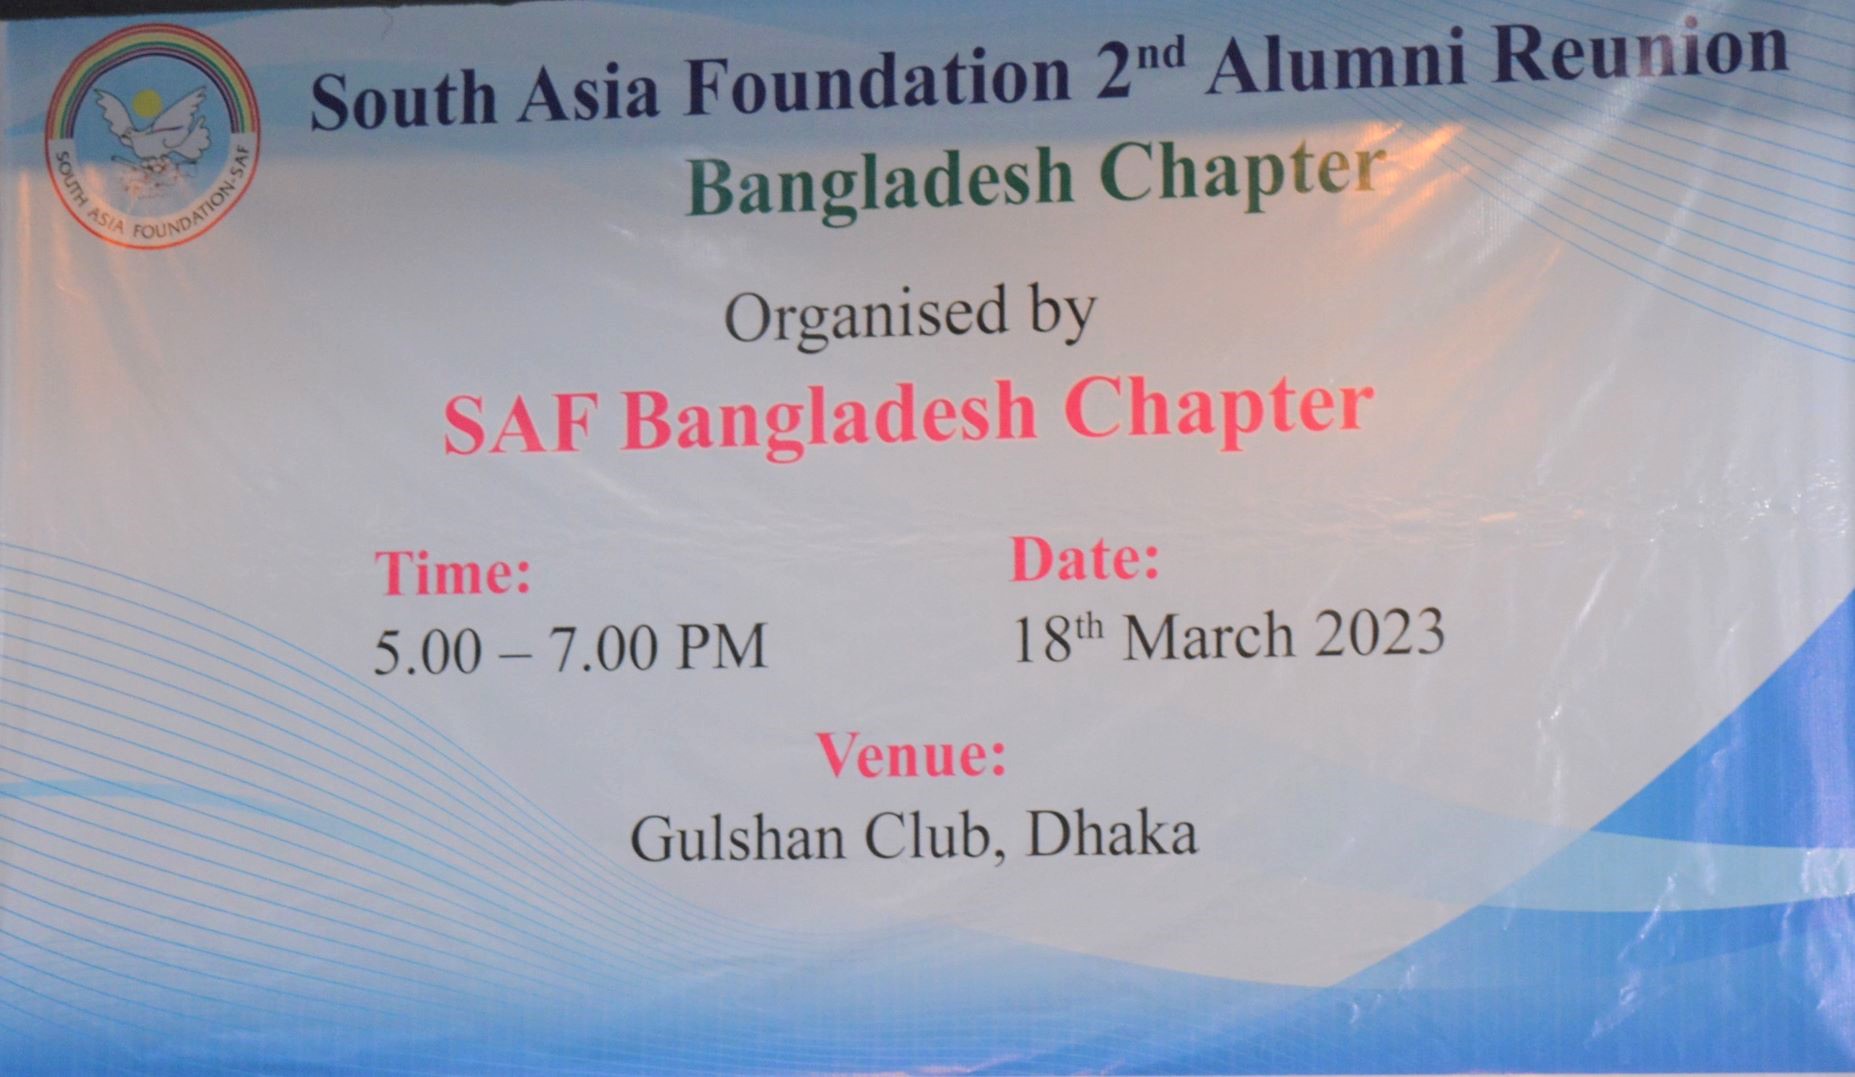 South Asia Foundation- Bangladesh Alumni Reunion held in Dhaka